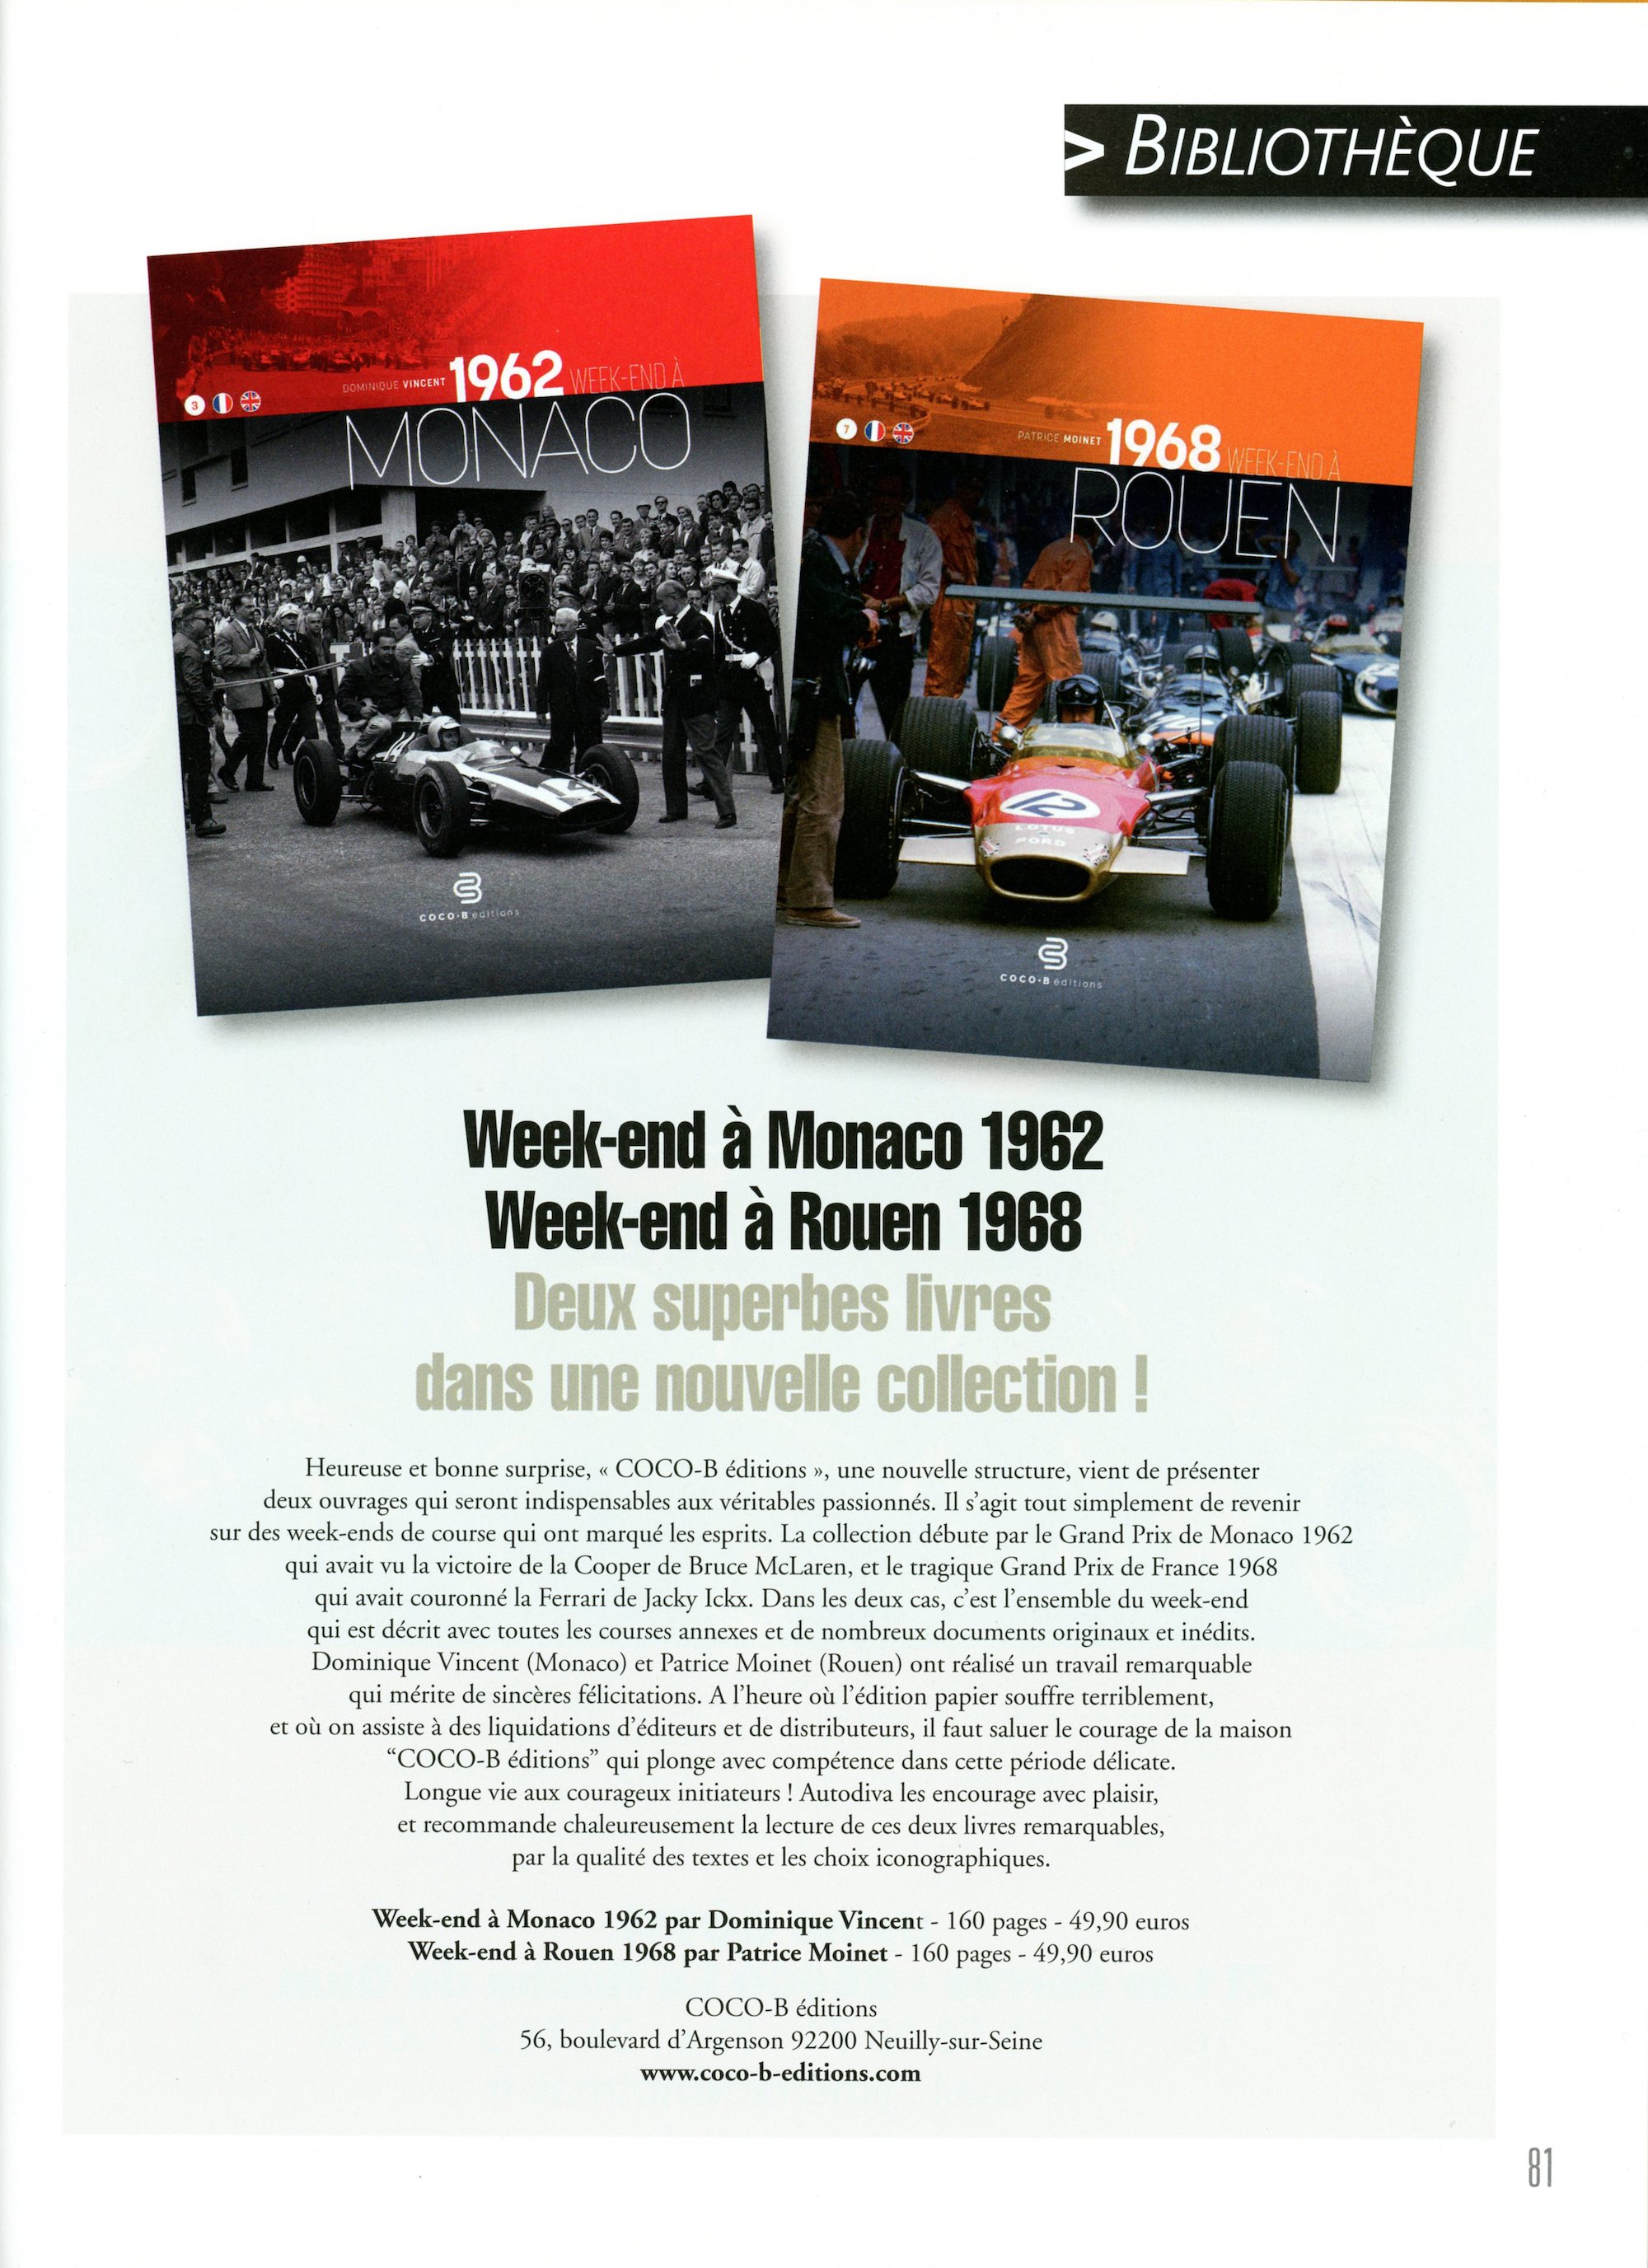 AutoDiva sur Rouen et Monaco